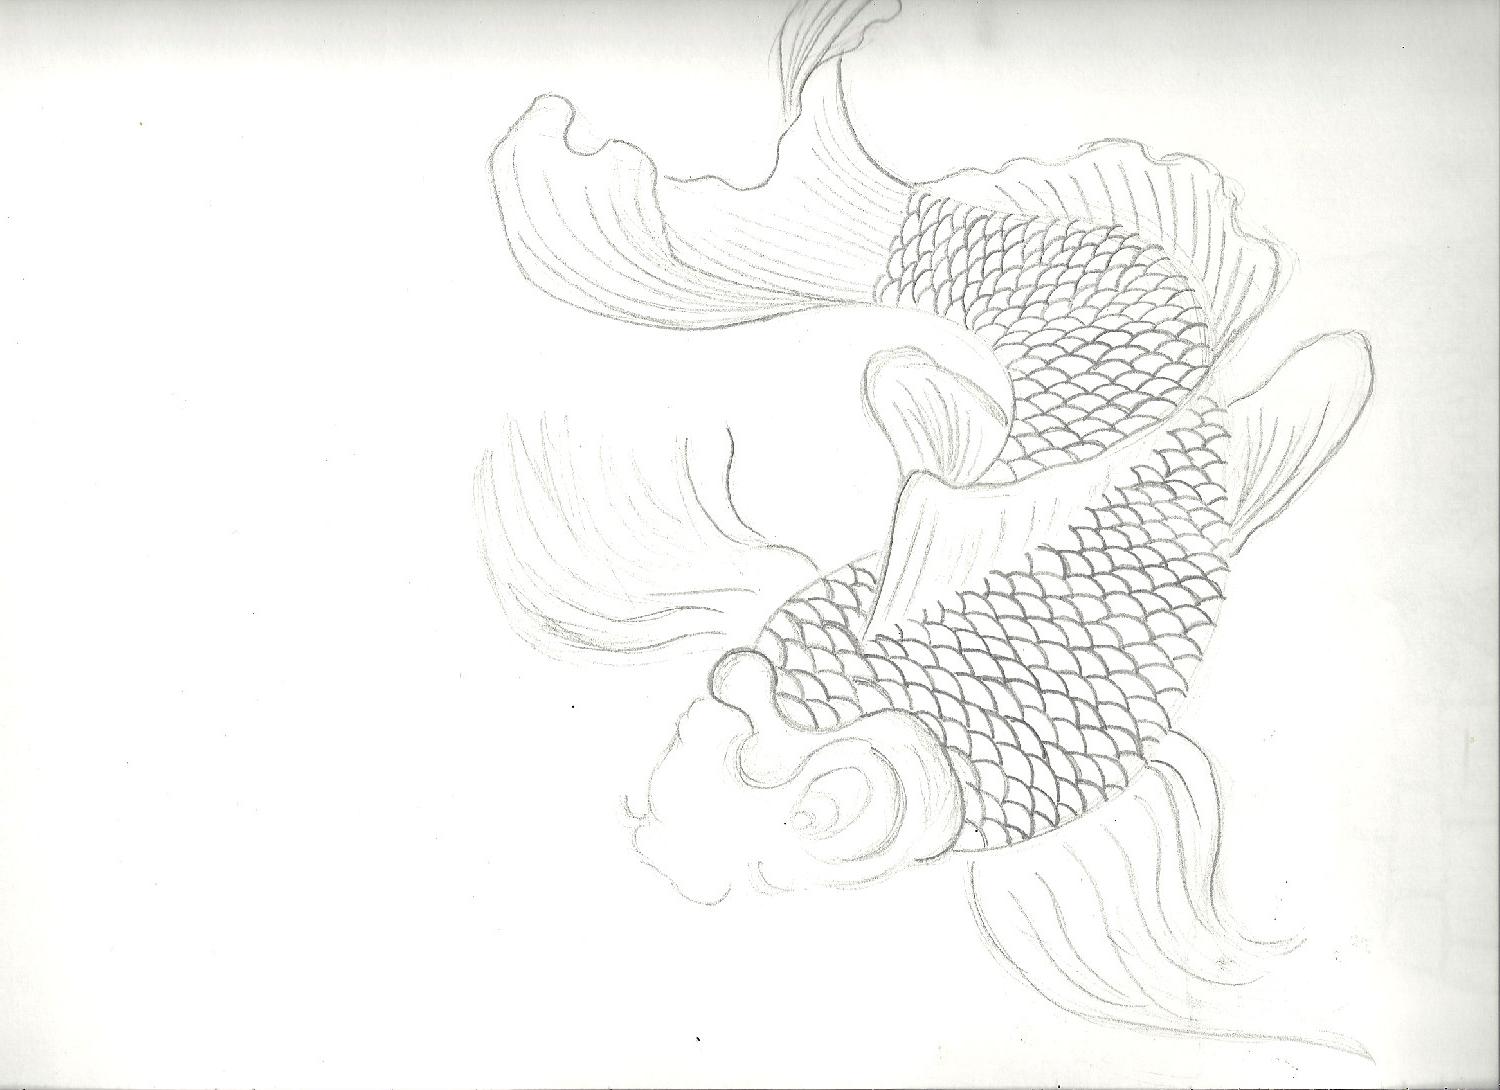 japanese koi fish drawing